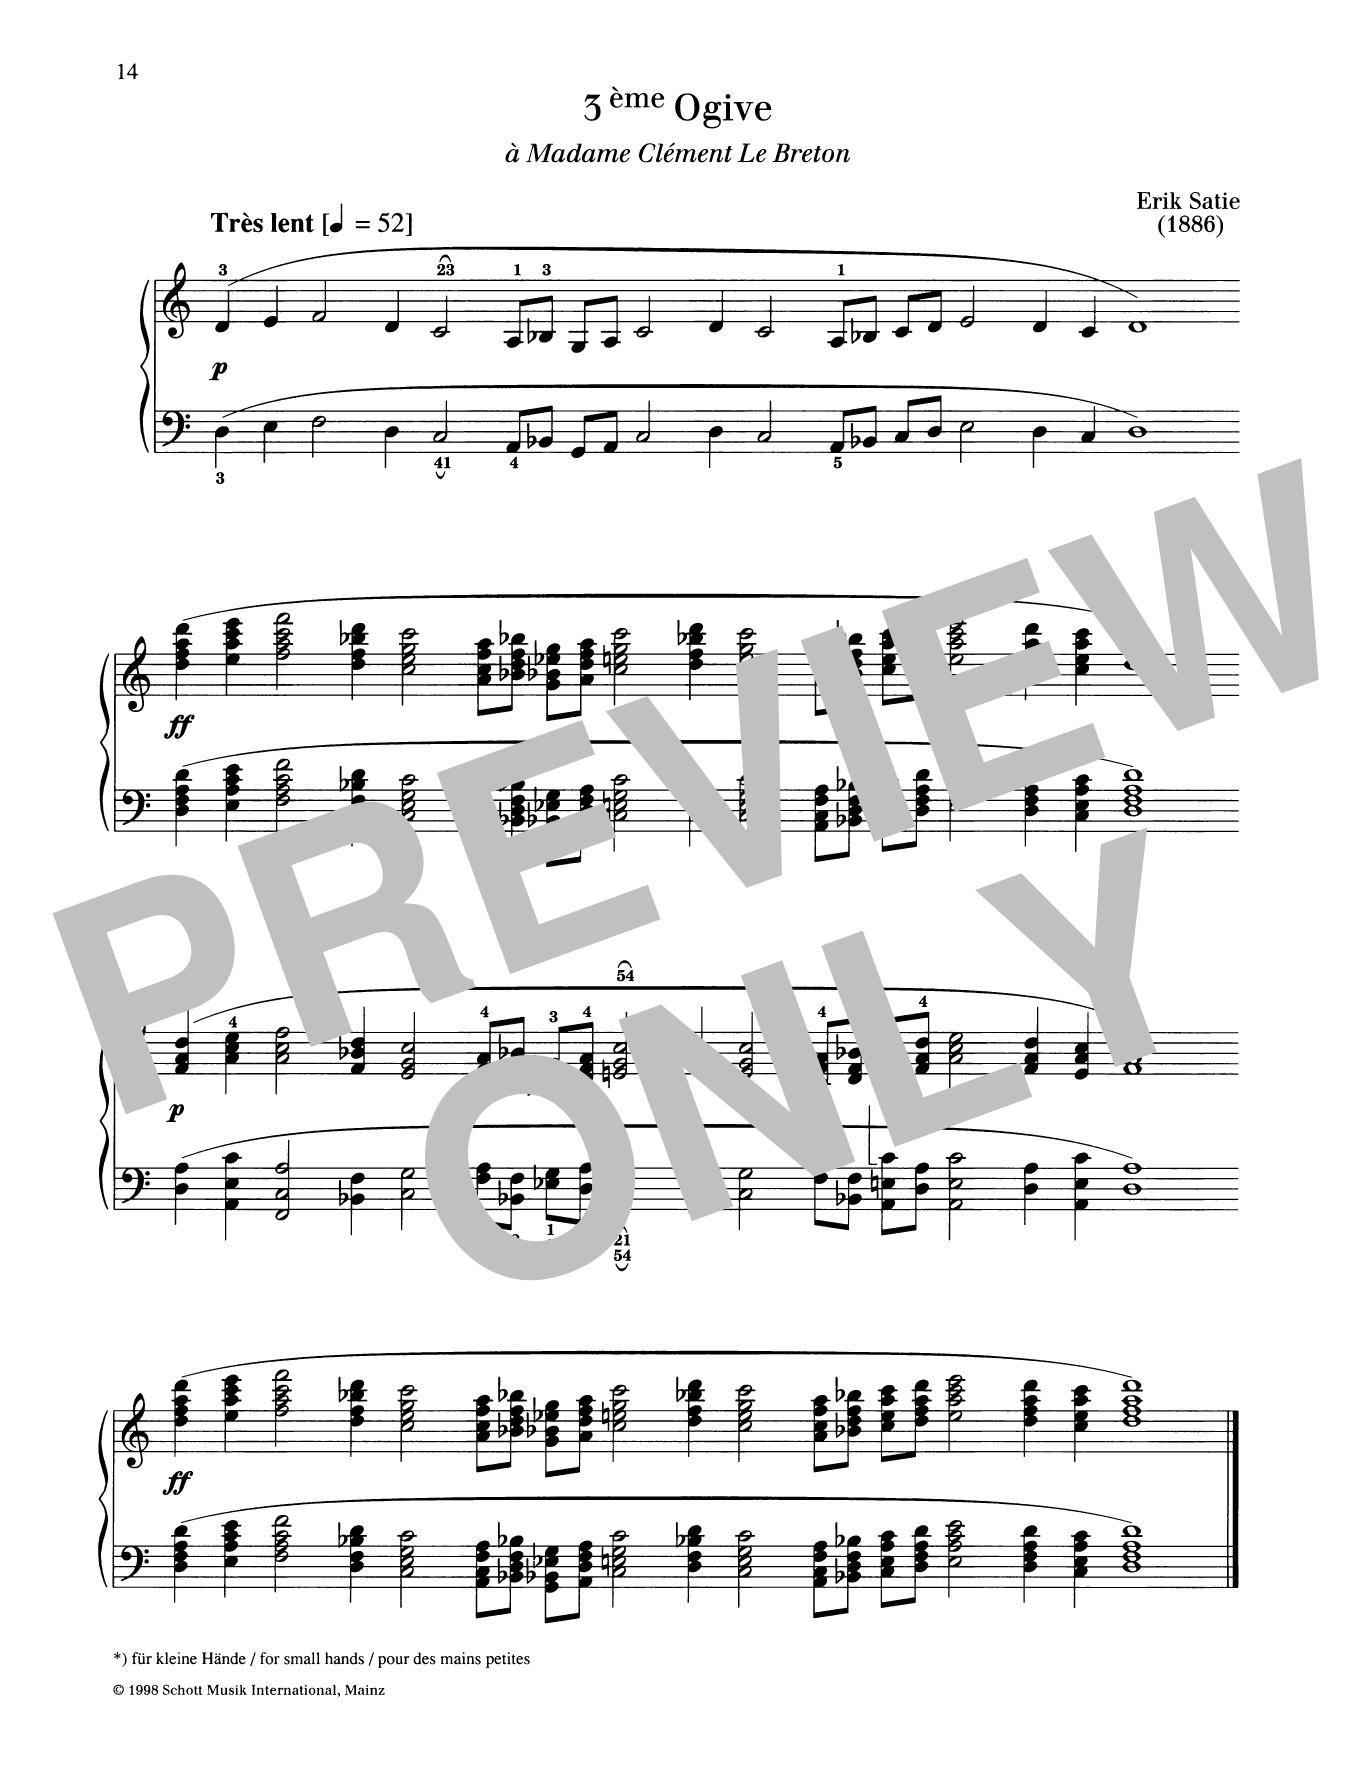 Download Erik Satie 3ème Ogive Sheet Music